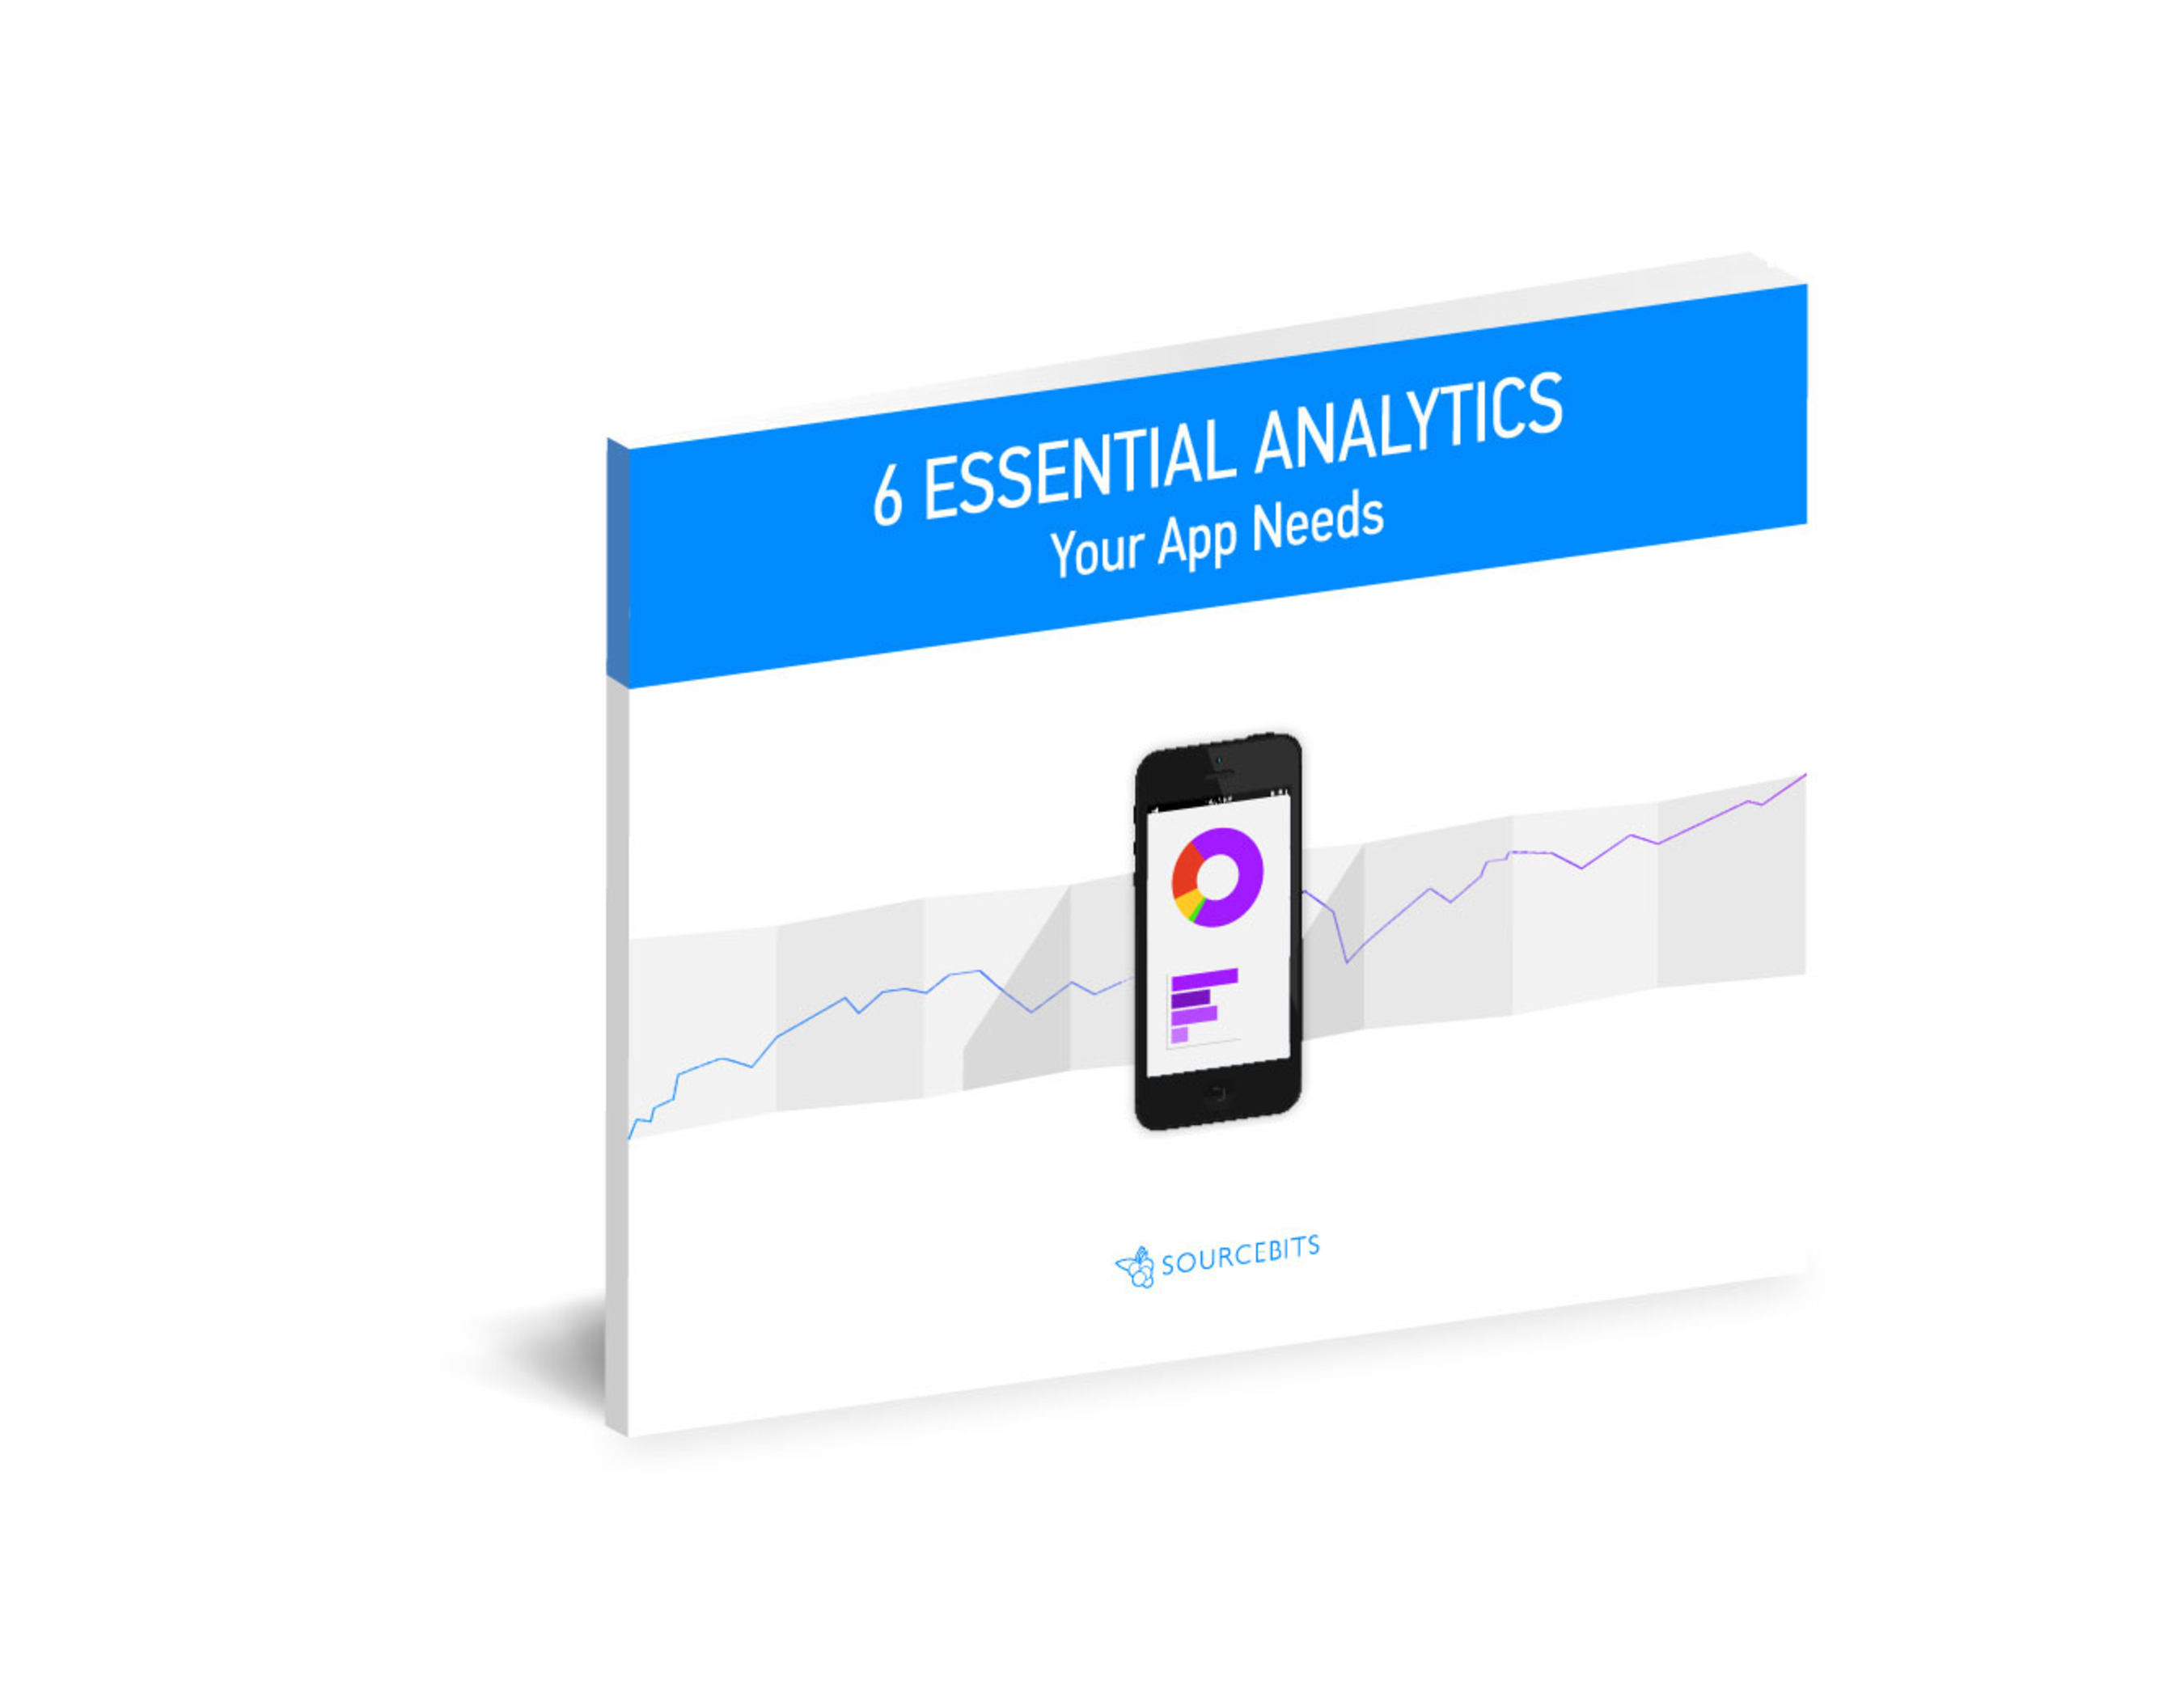 6 Essential Analytics Your App Needs  (PRNewsFoto/Sourcebits)